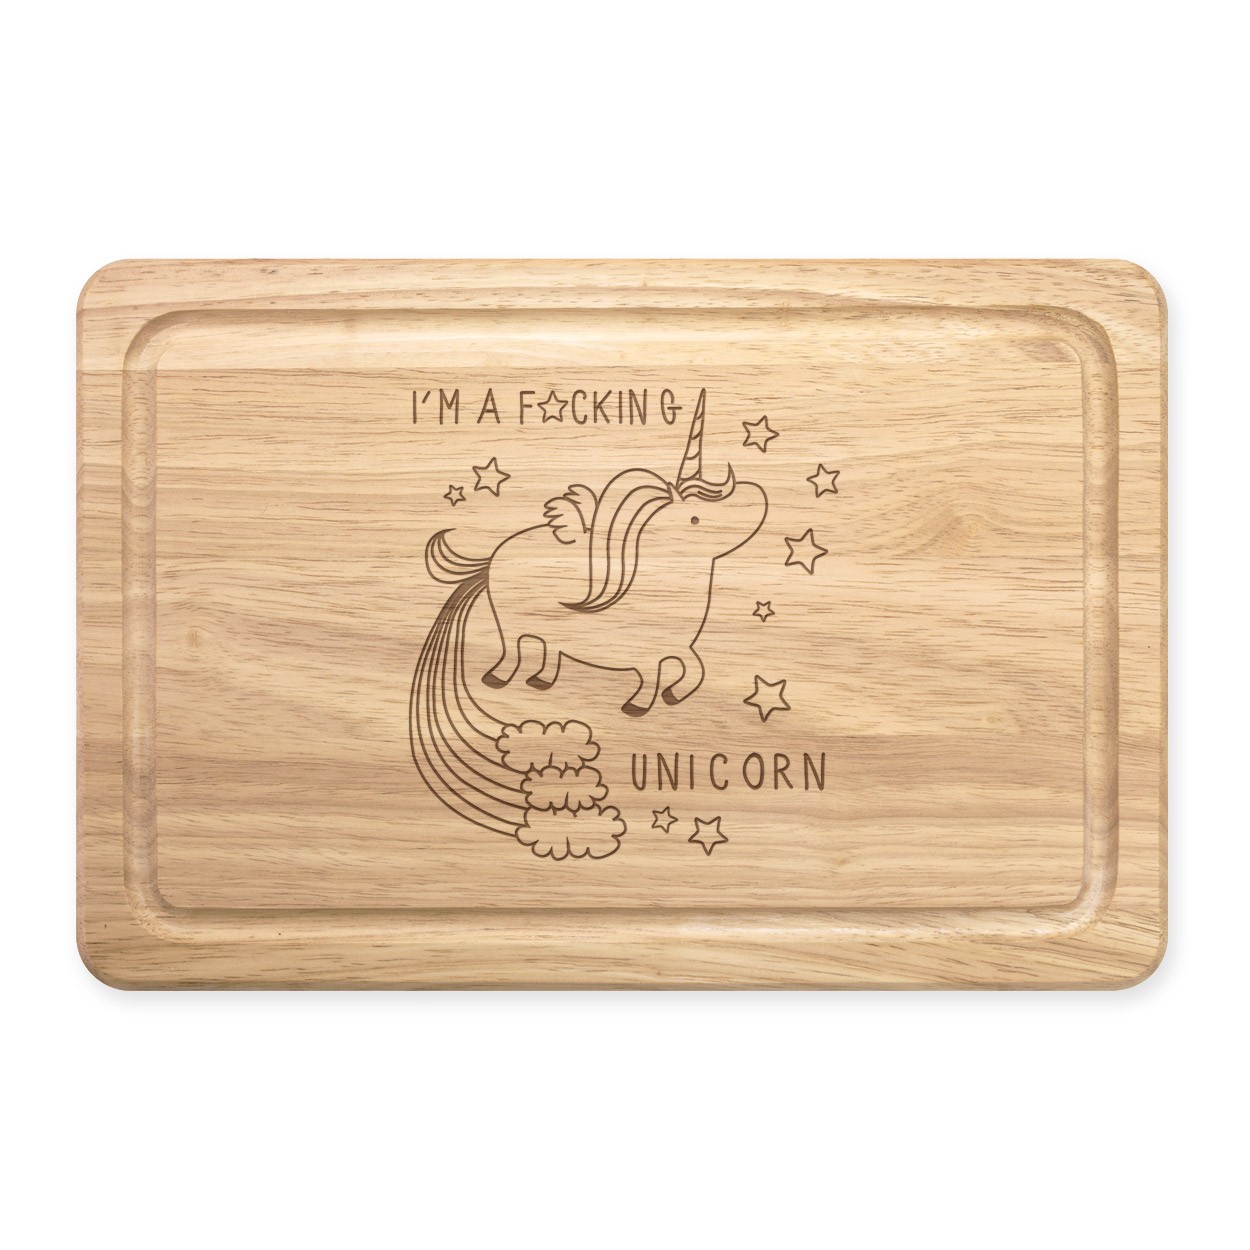 I'm A F-cking Unicorn Rectangular Wooden Chopping Board